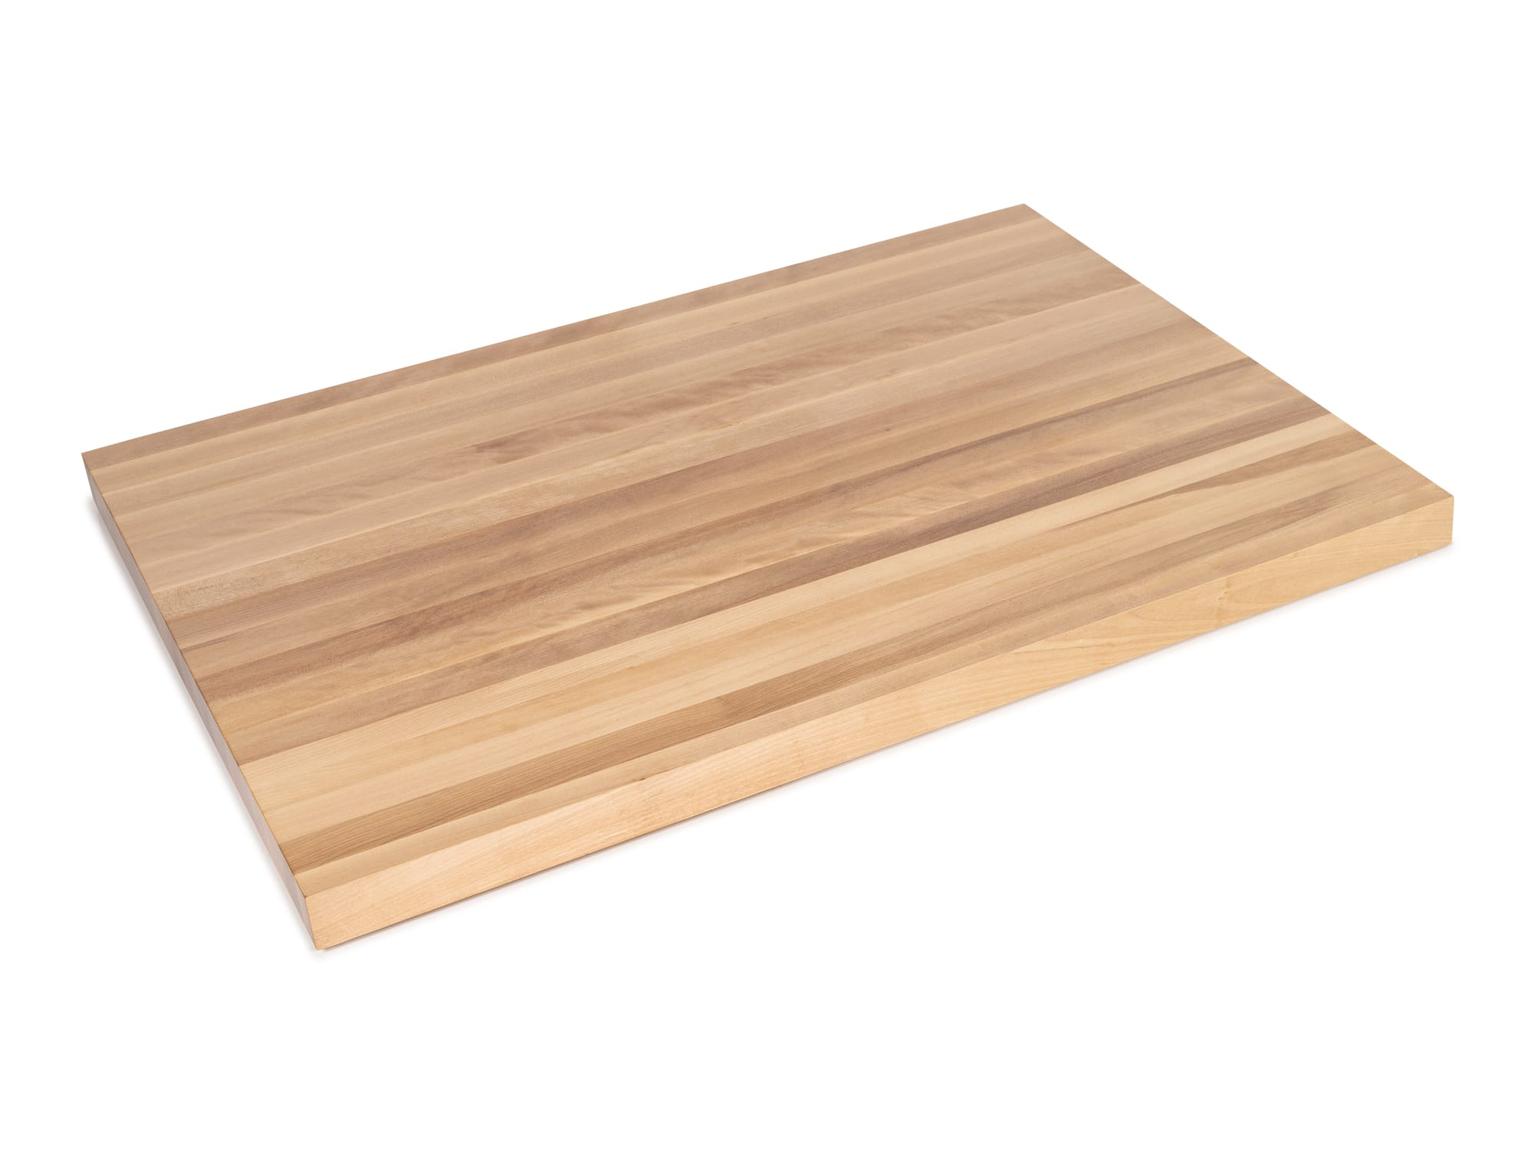 Laminated Wood Top